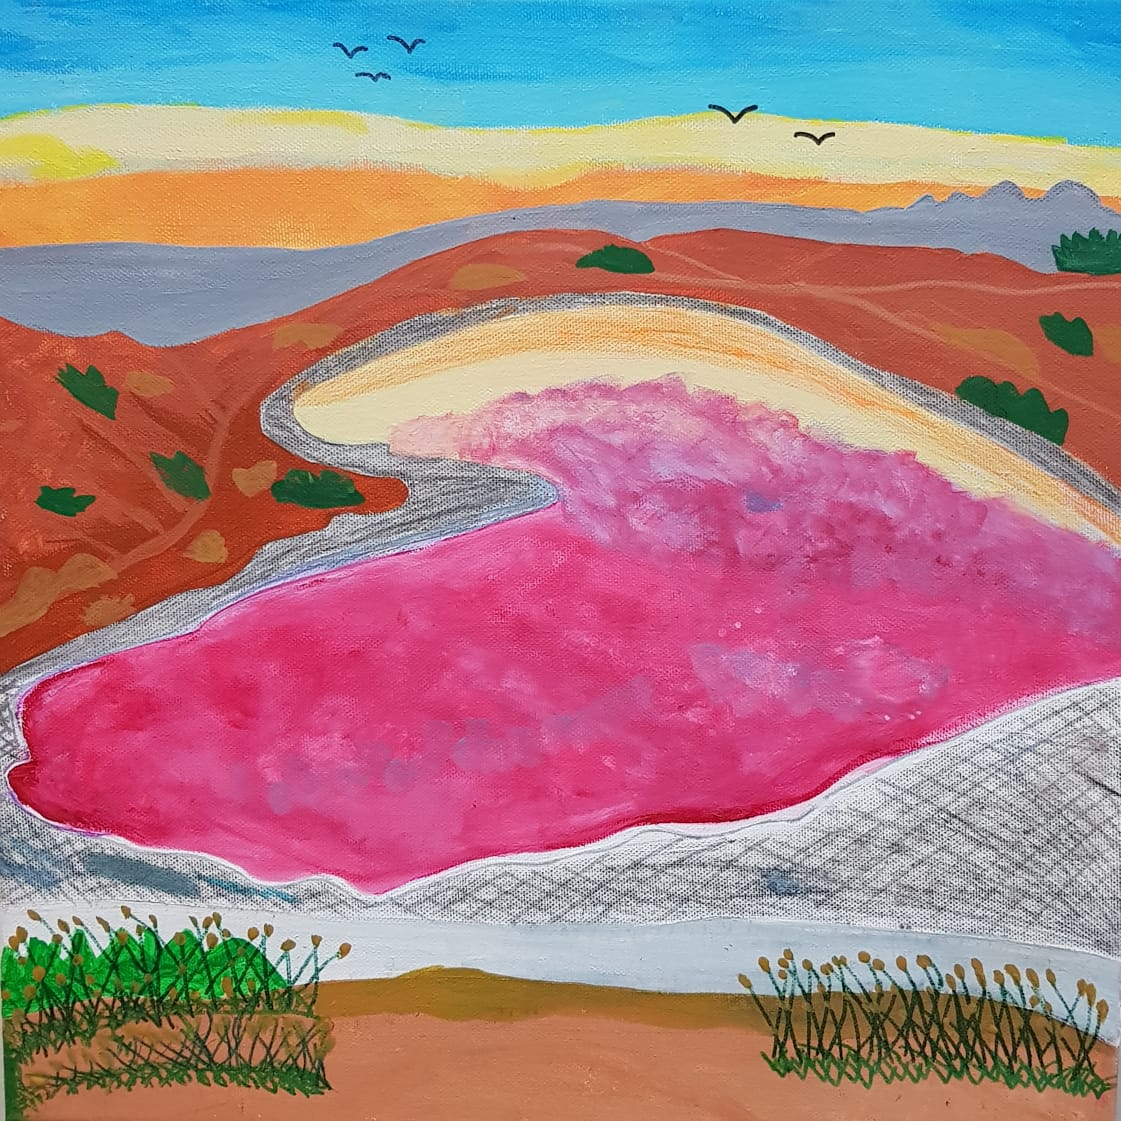 Pink lake – Ras Al Khaimah by Muhammad Jawad Saif.